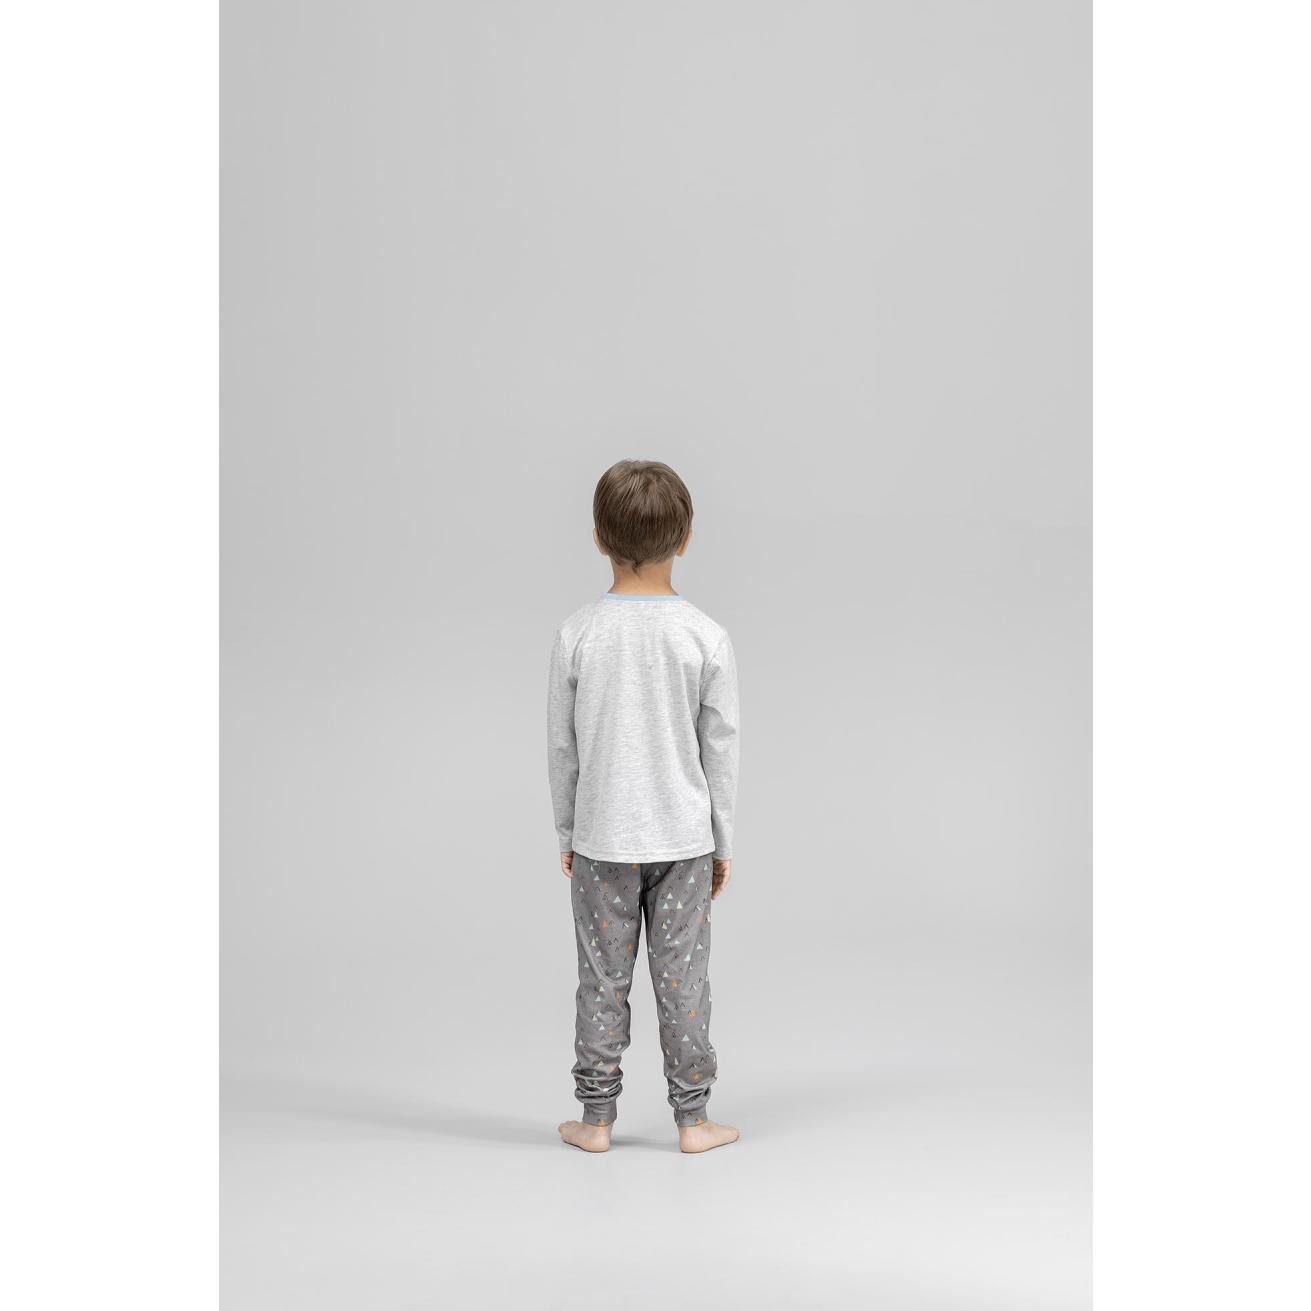 Пижама для мальчиков Kids by togas Касслер серый 92-98 см, размер 92-98 см - фото 5